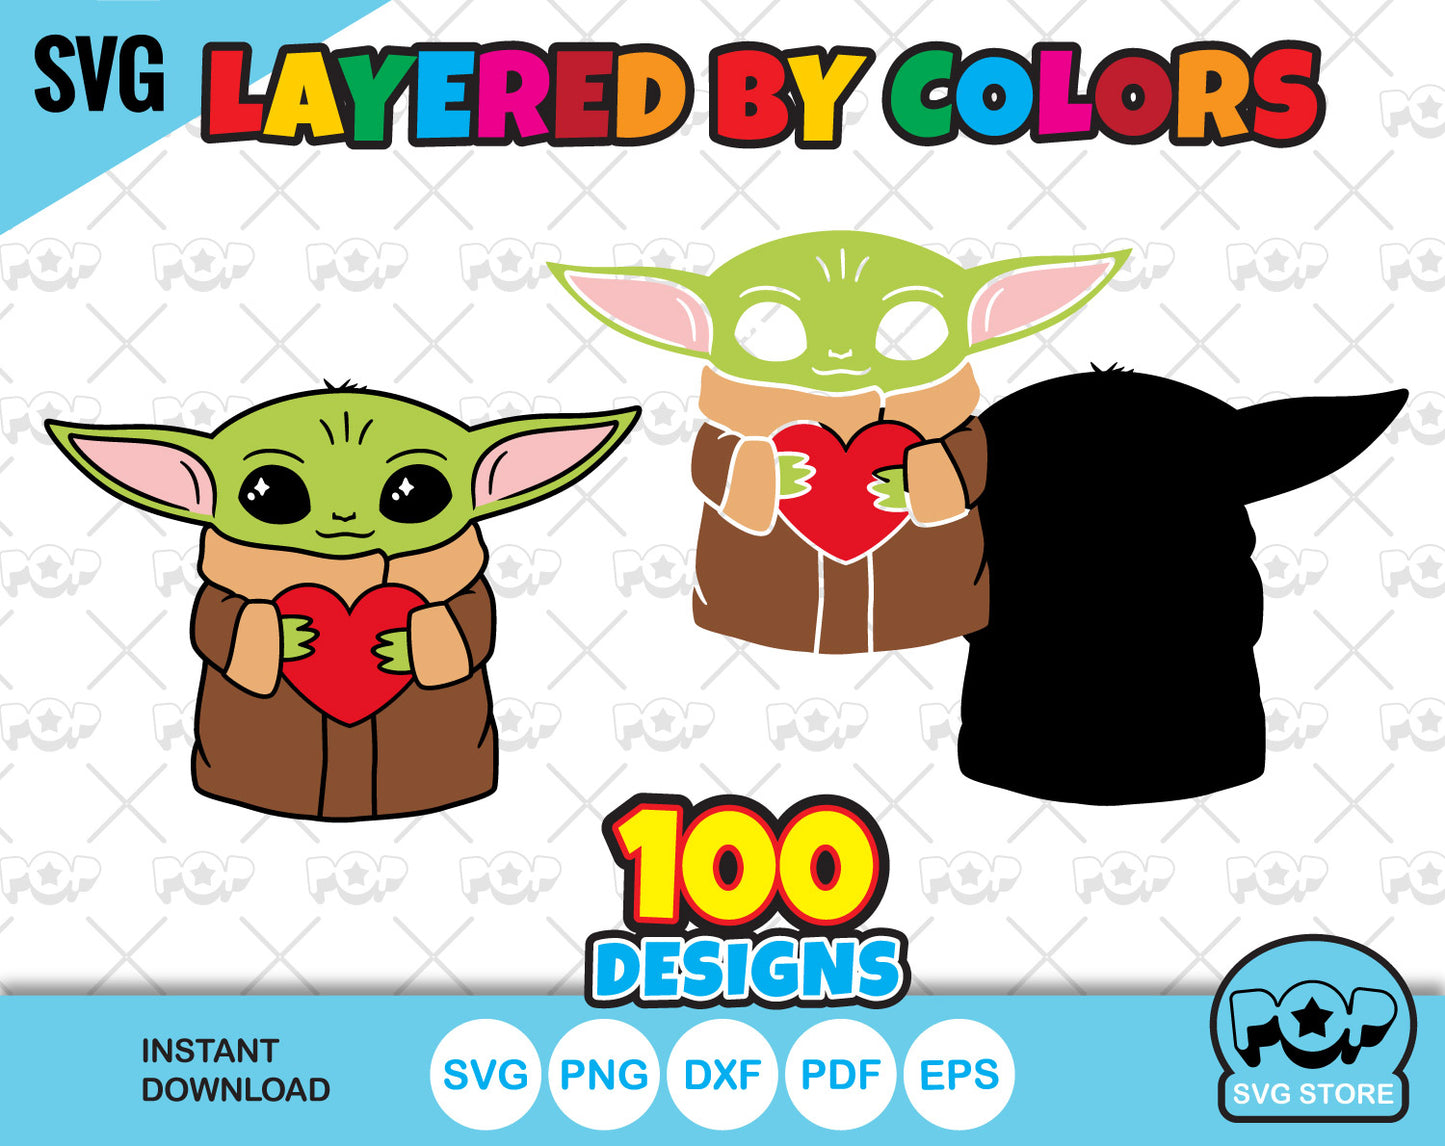 Baby Yoda 100 cliparts bundle, Baby Yoda svg cut files for Cricut / Silhouette, baby yoda png, dxf